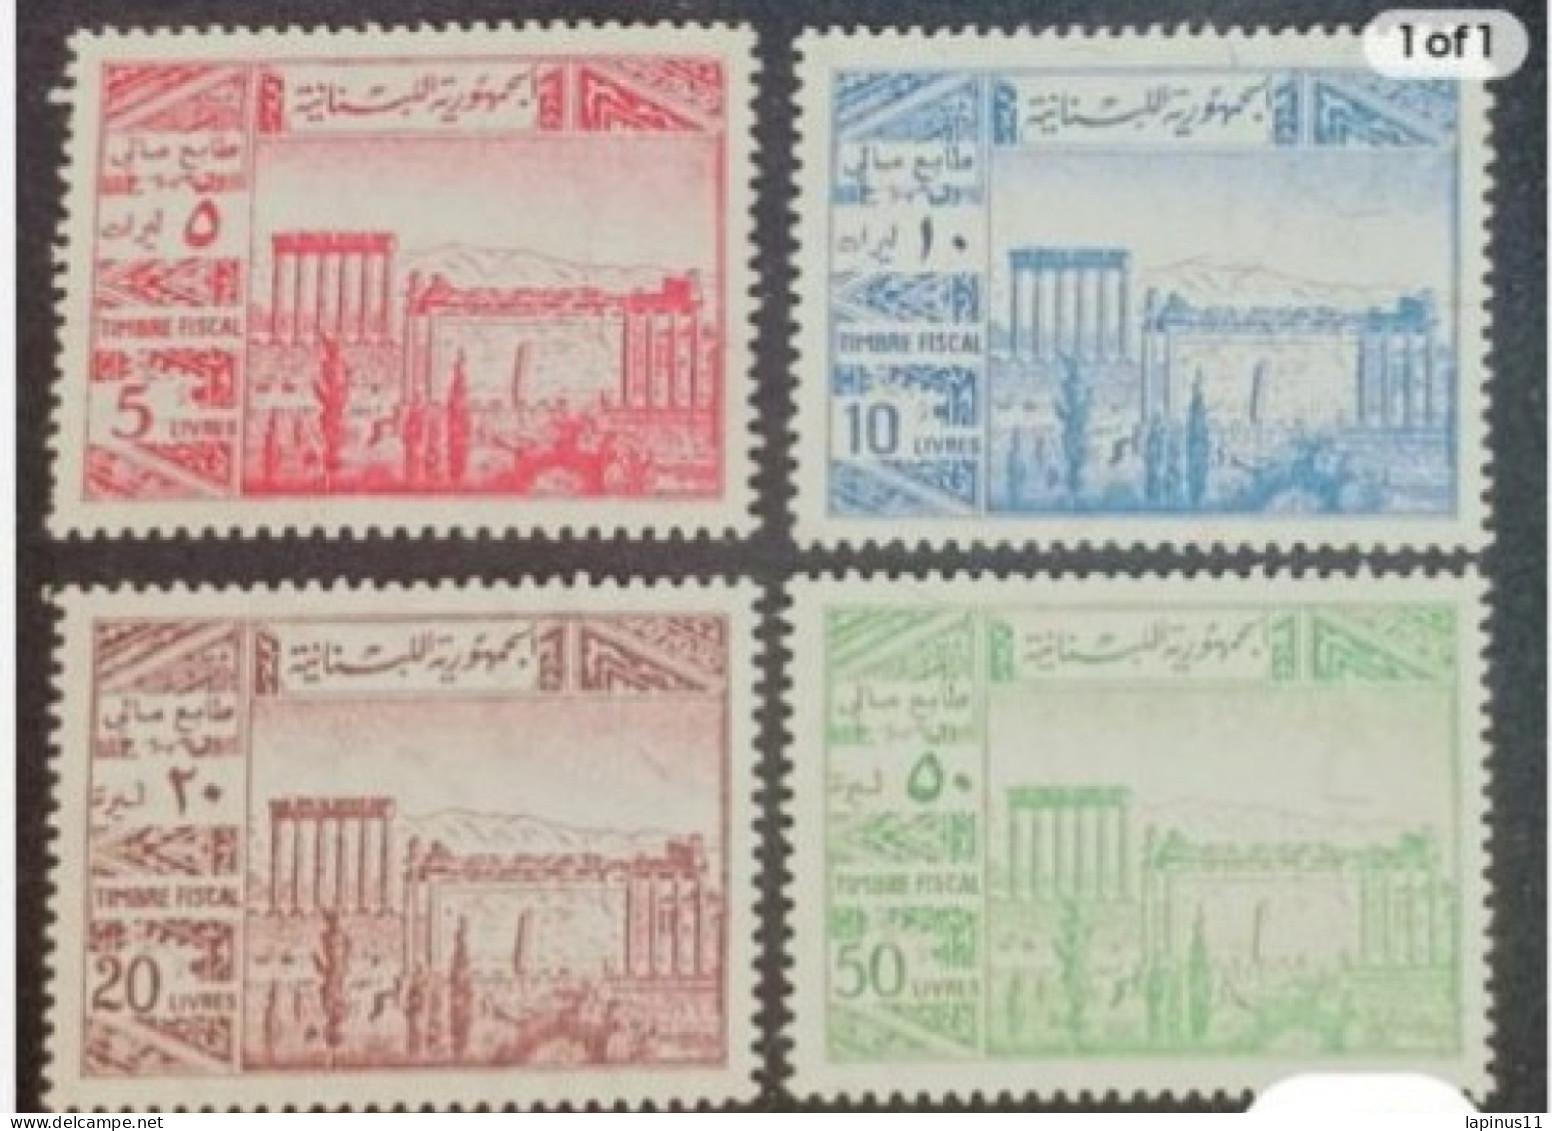 LIBAN LEBANON FISCAL REVENUE STAMPS 1974 RARE  ANJAR ISSUE FULL SHEET MNH 5102050 LIVRES - Líbano